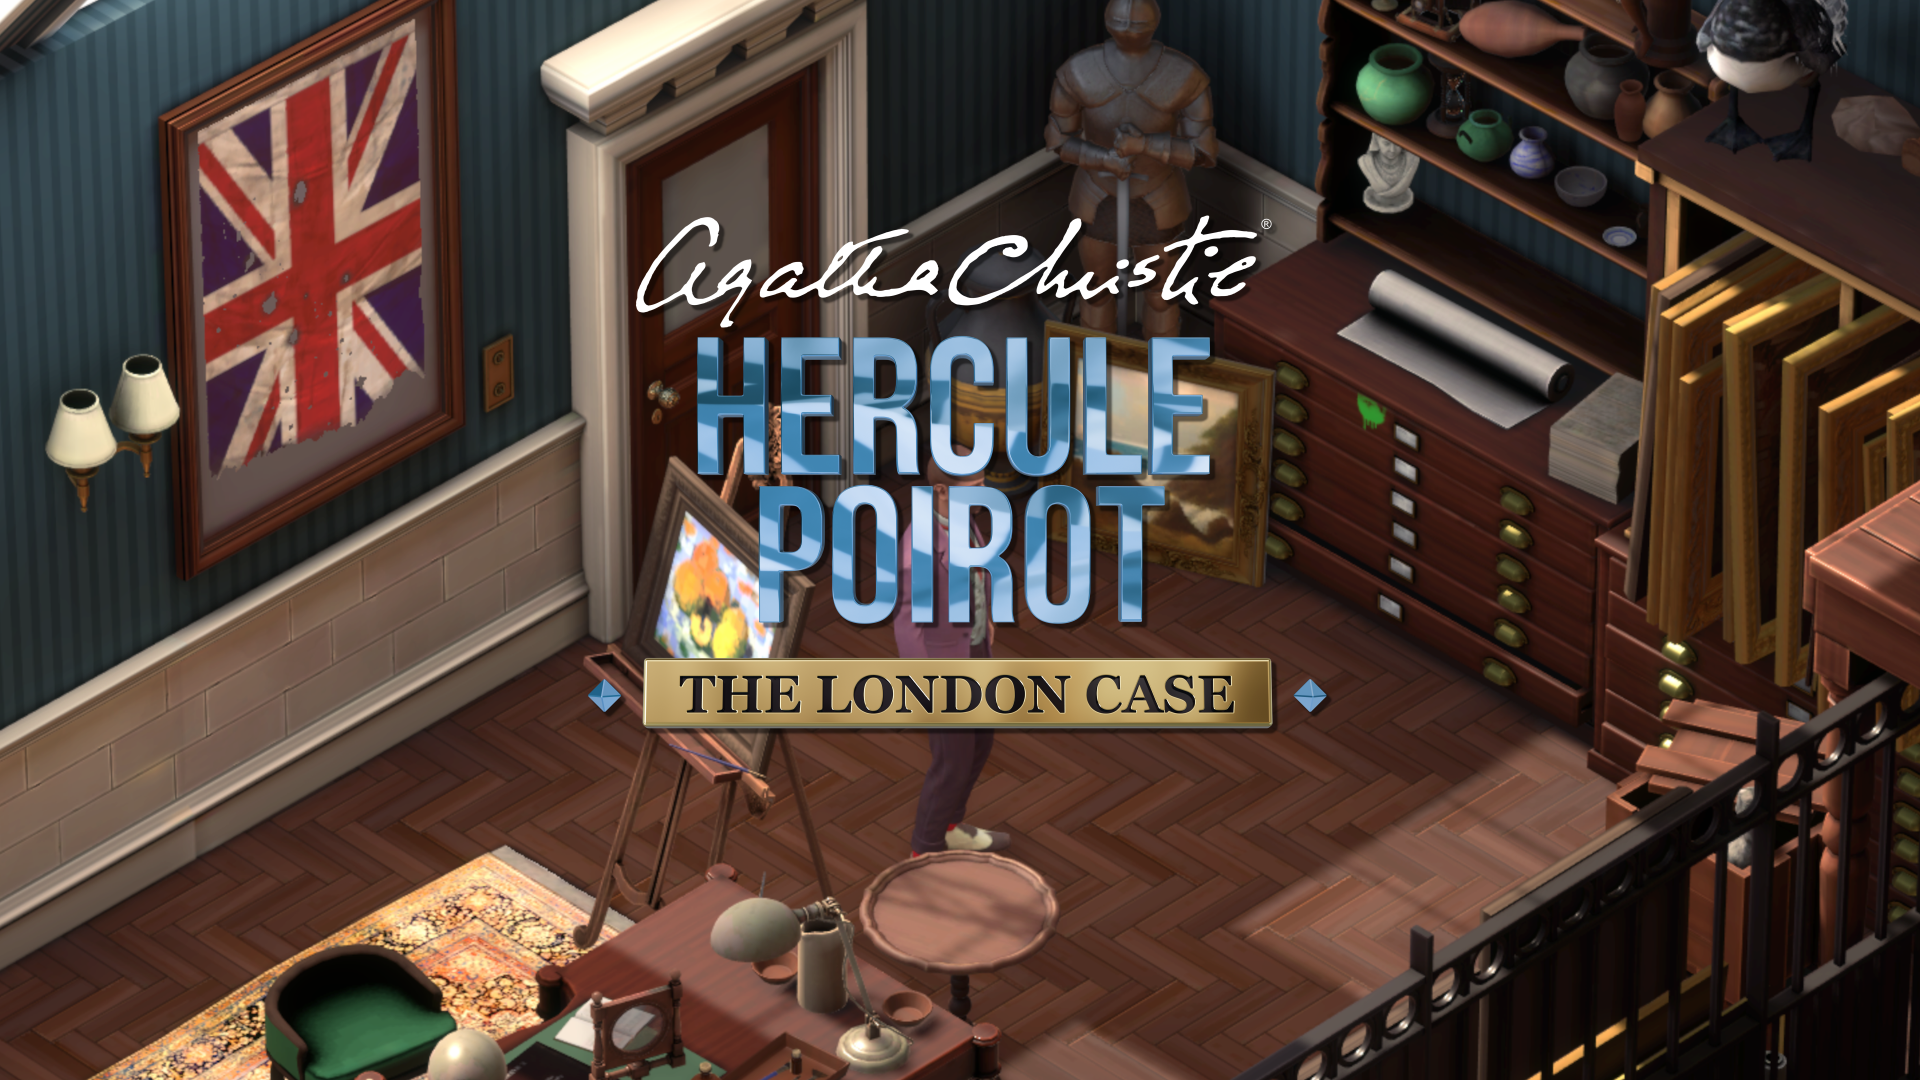 Agatha Christie - Hercule Poirot: The London Case angespielt | Newseule